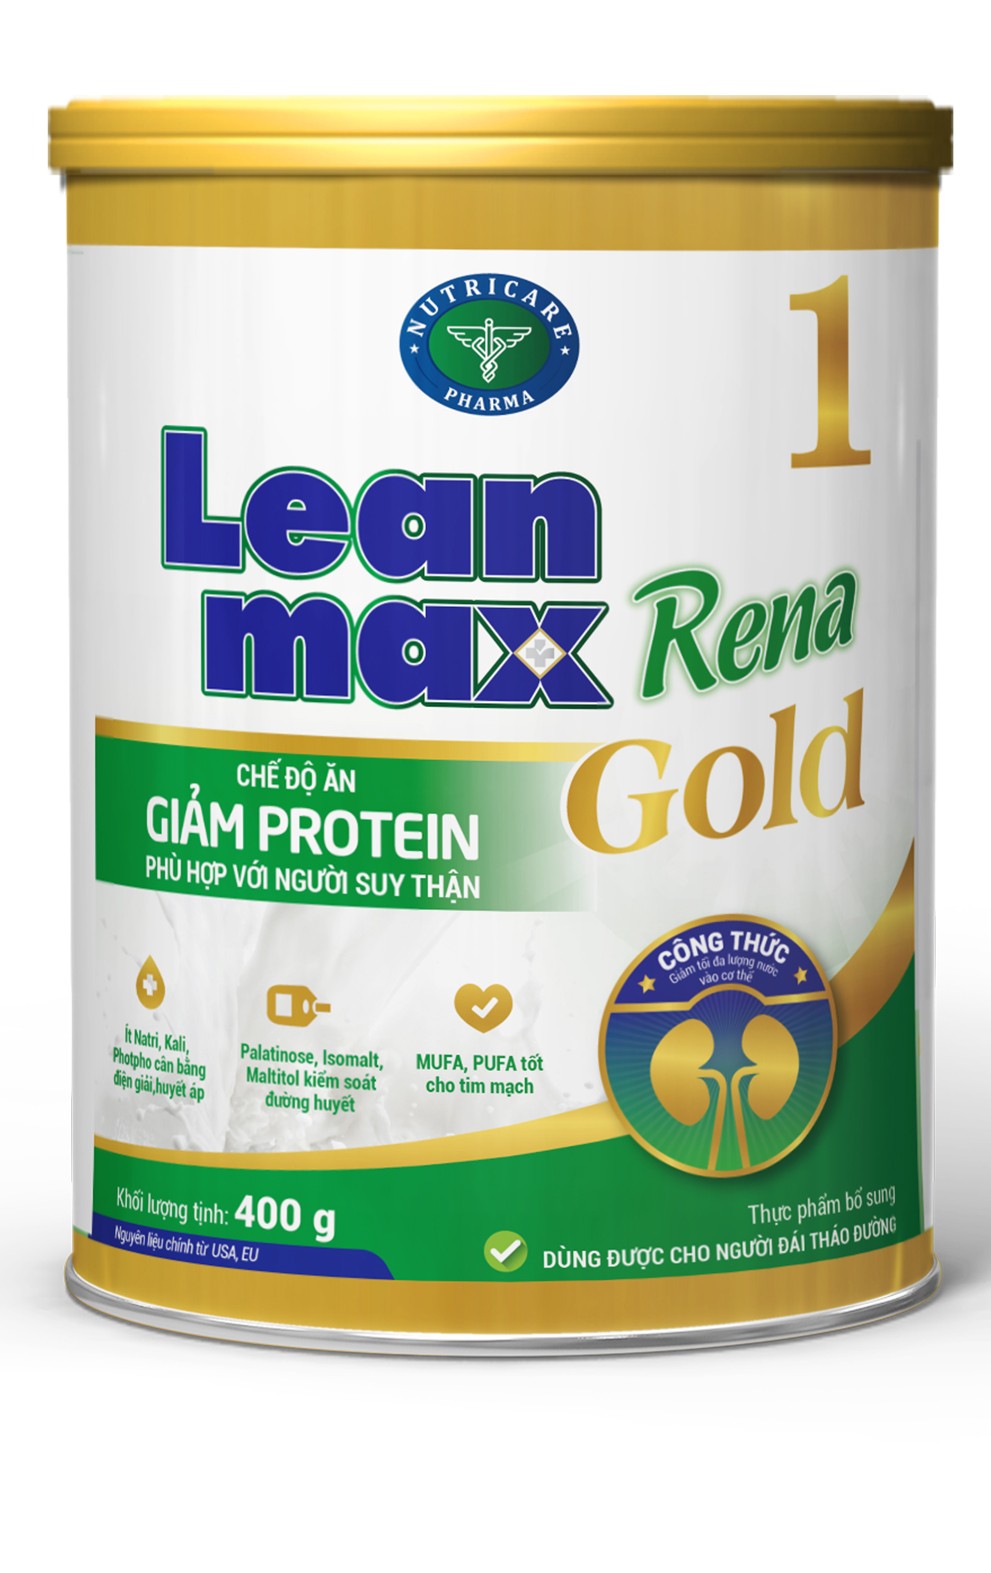 Sữa Lean max Rena Gold 1 